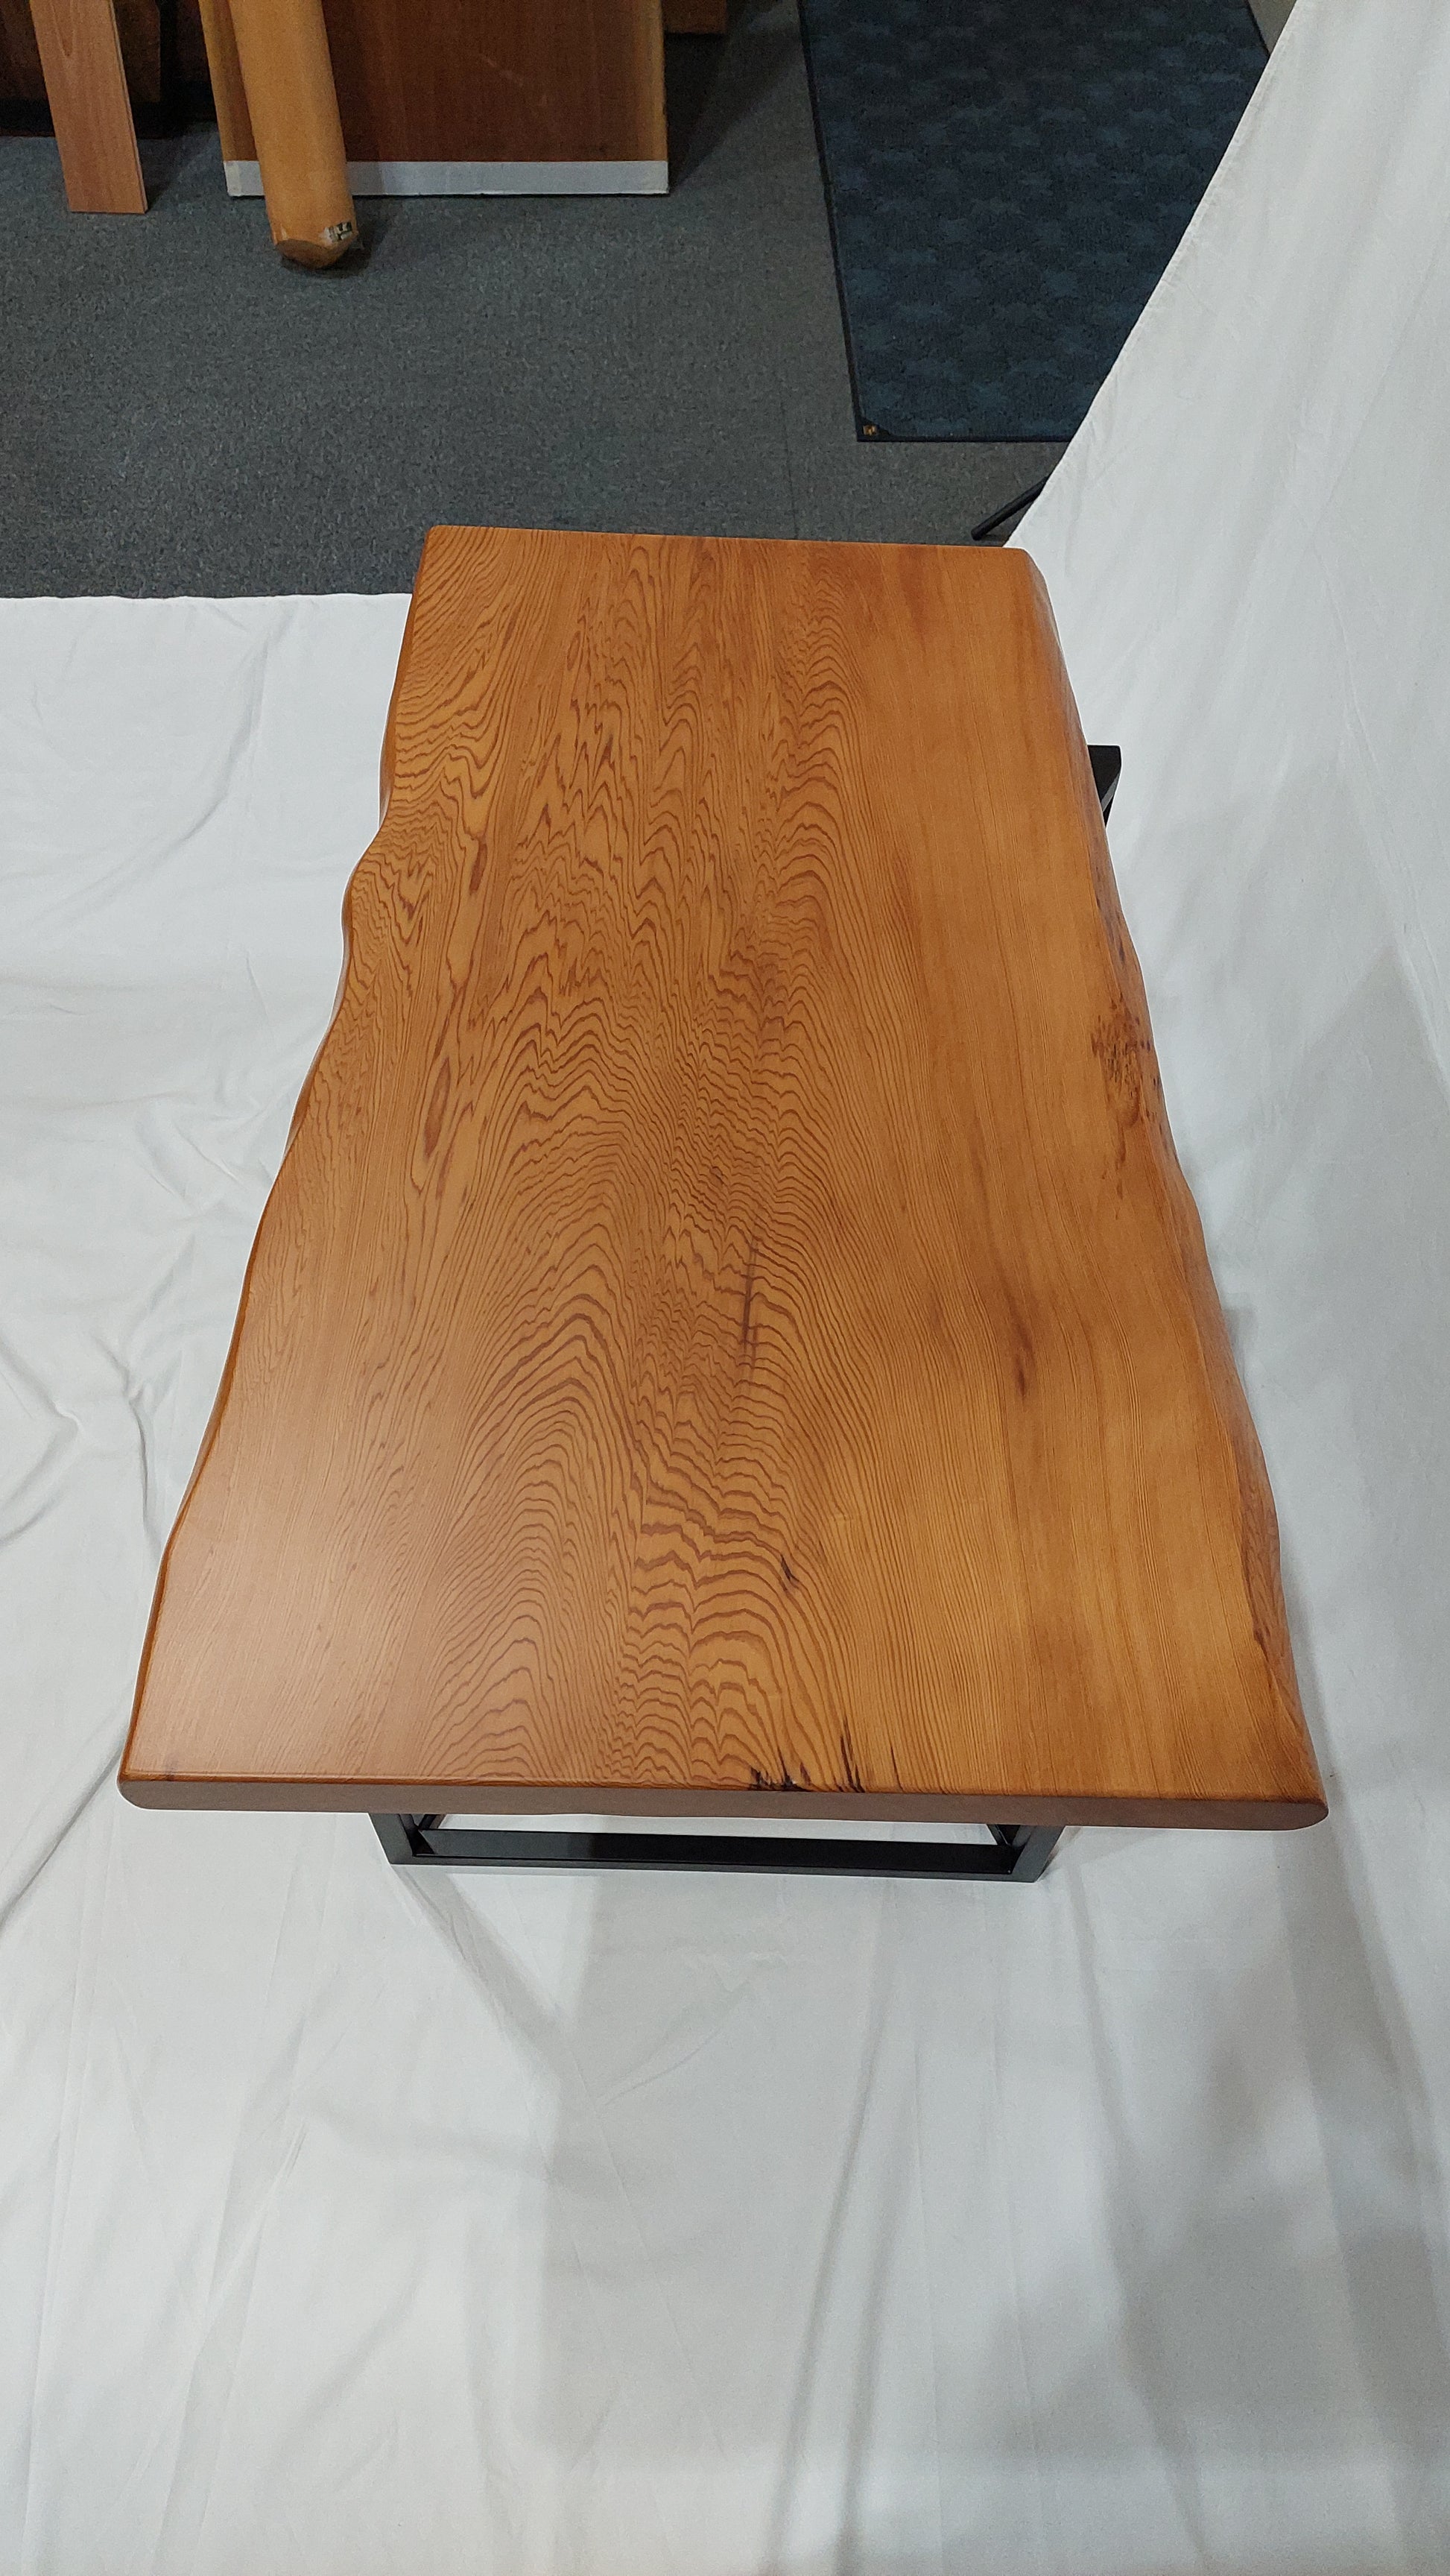 A0019 屋久杉 無垢一枚板 テーブル天板 1,040mm × 520mm × 60mm – メイ